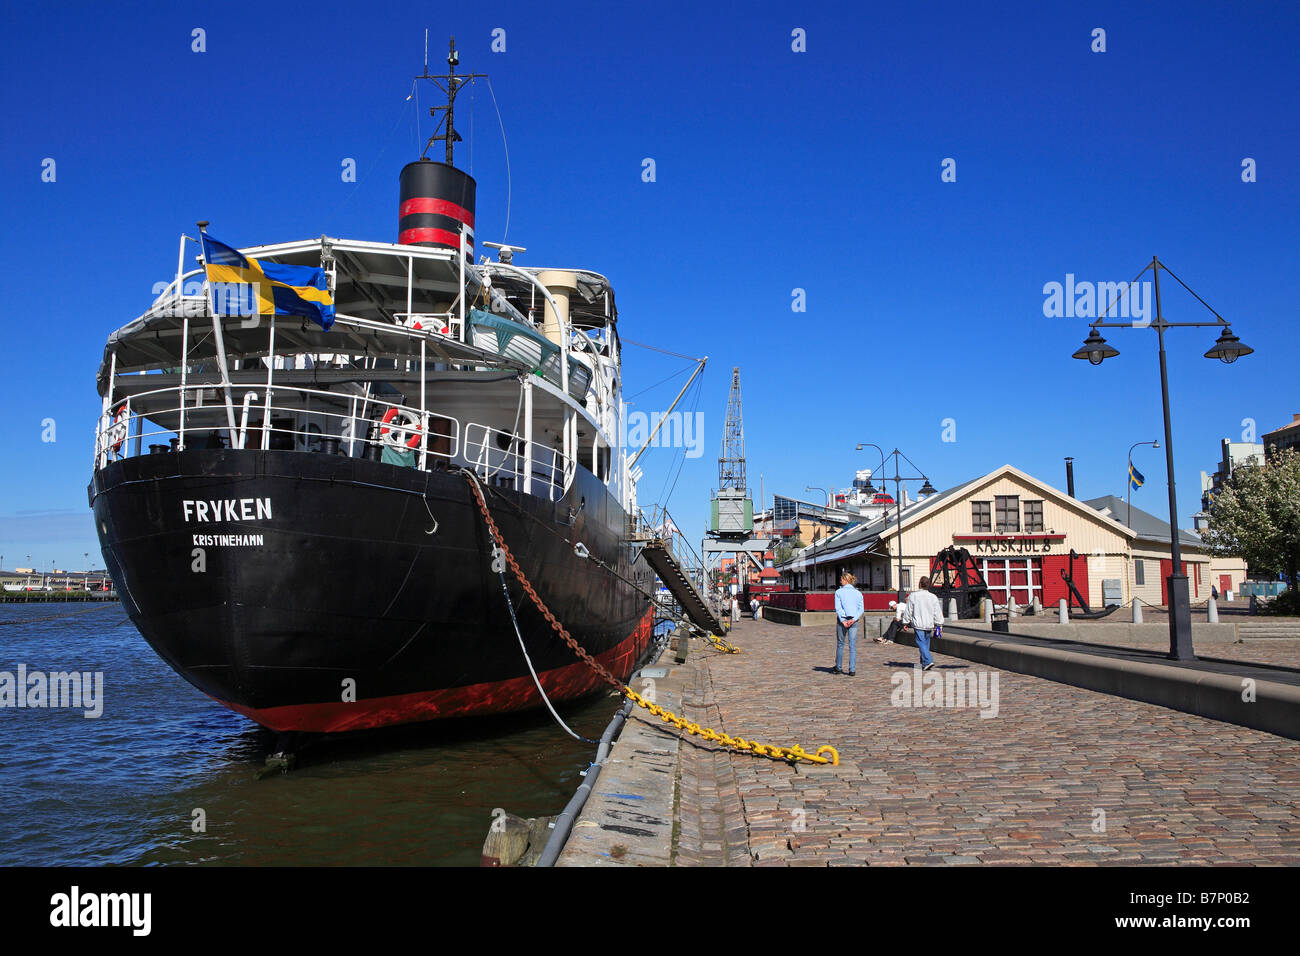 Sweden, Gothenburg, Goteborgs Maritima Centrum - Floating Ship Museum ...